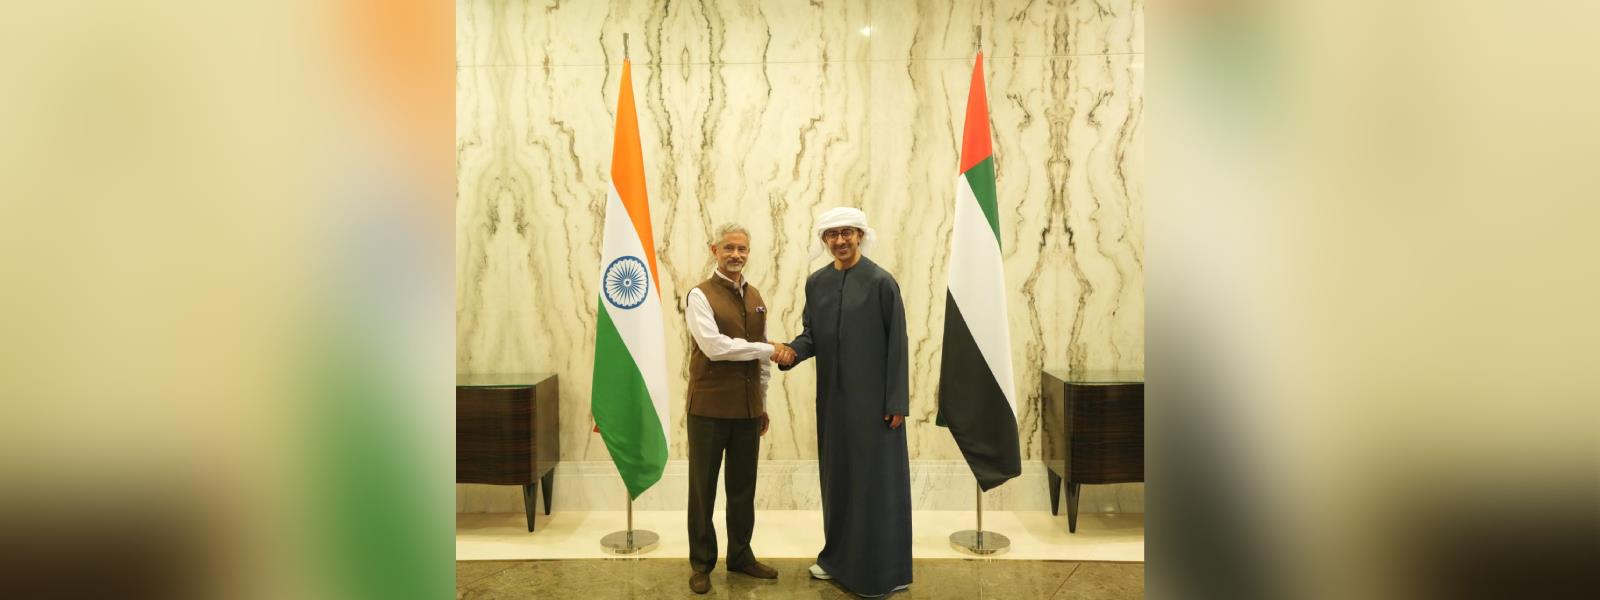 External Affairs Minister, Dr. S. Jaishankar met Minister of Foreign Affairs of the United Arab Emirates, H.H. Sheikh Abdullah bin Zayed Al Nahyan in Abu Dhabi